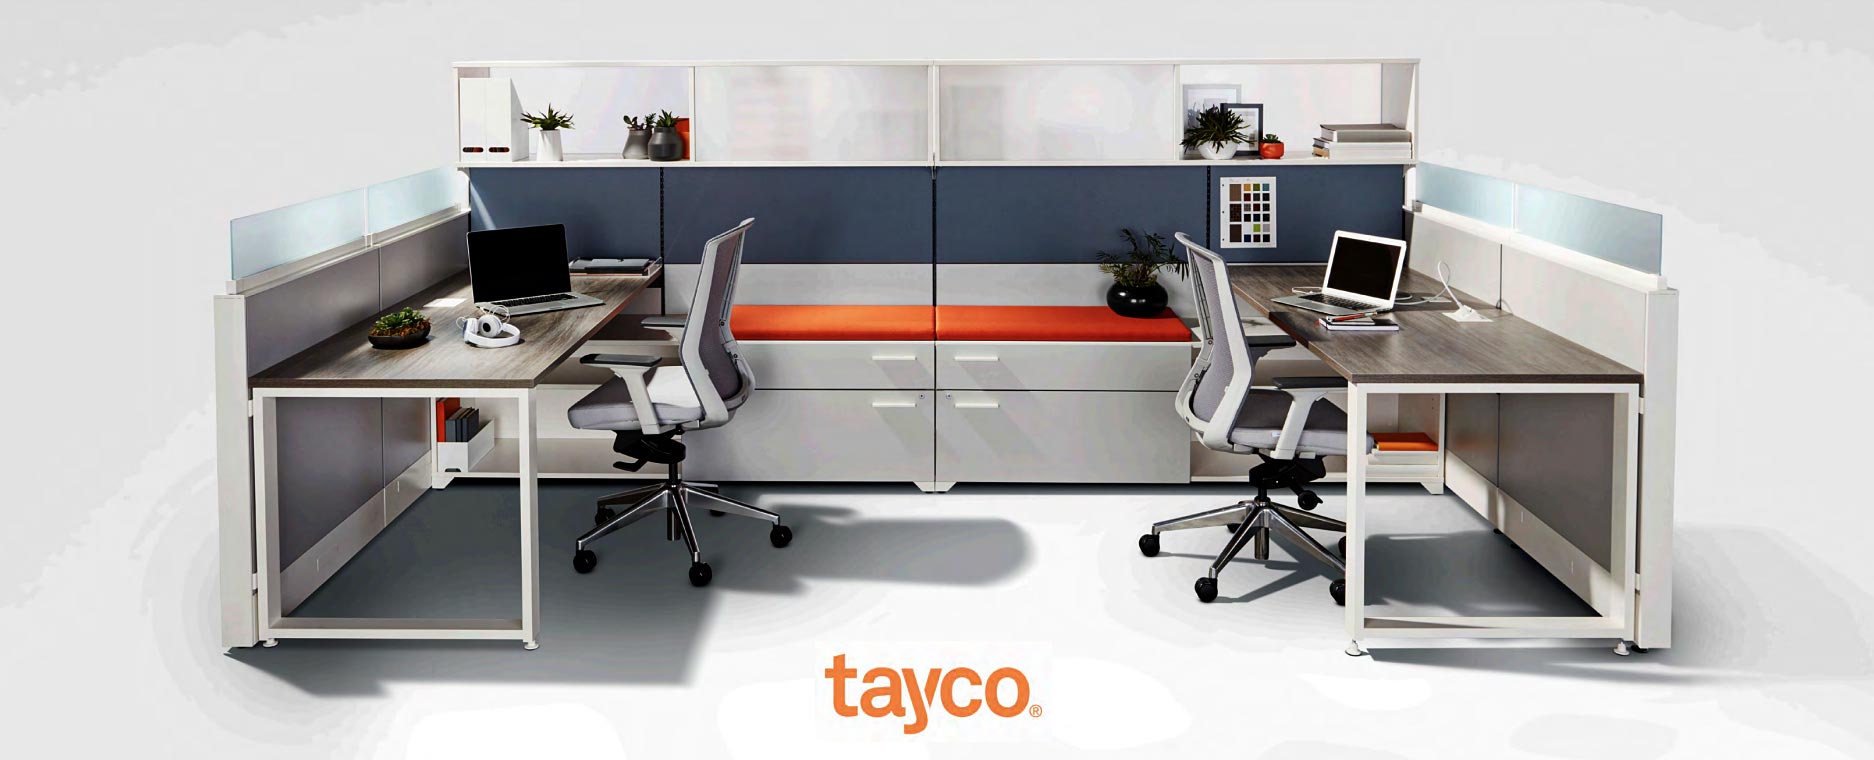 tayco-bottom-banner